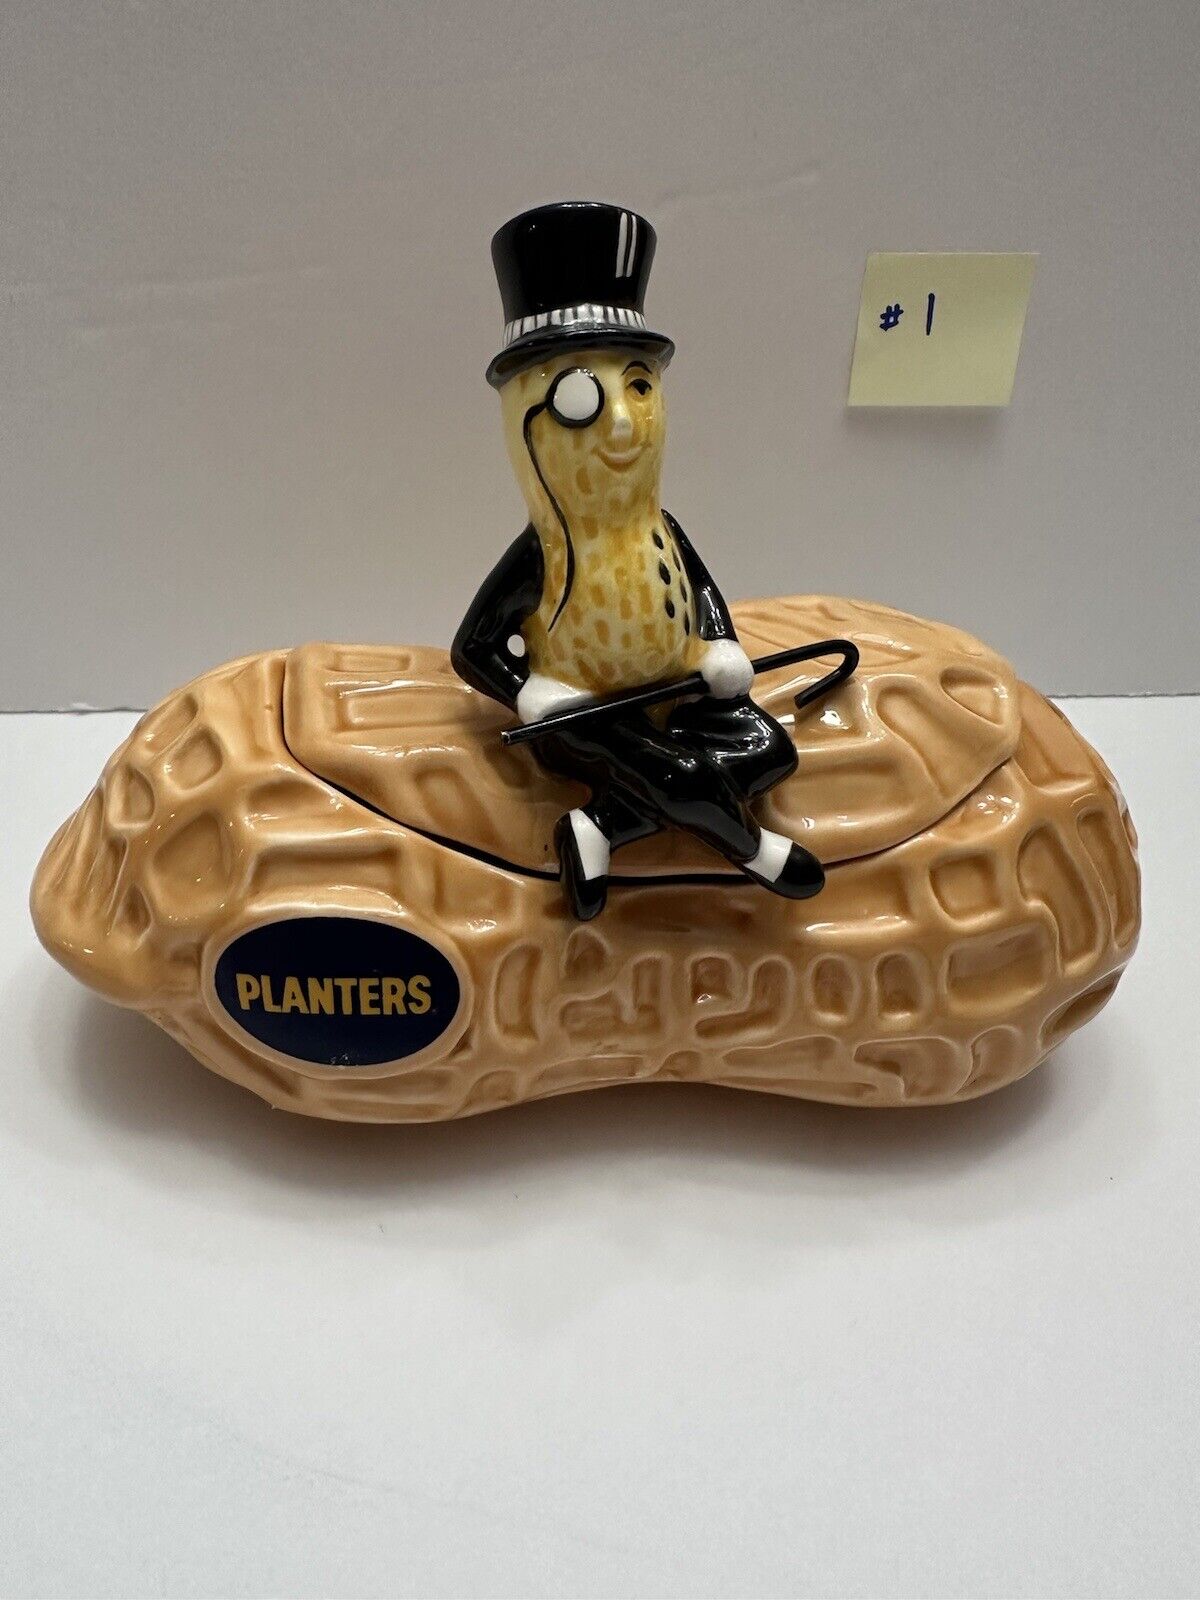 Planters Lifesavers Mr Peanut Candy Nuts Bowl with Lid Ceramic Vintage 1992 Rare